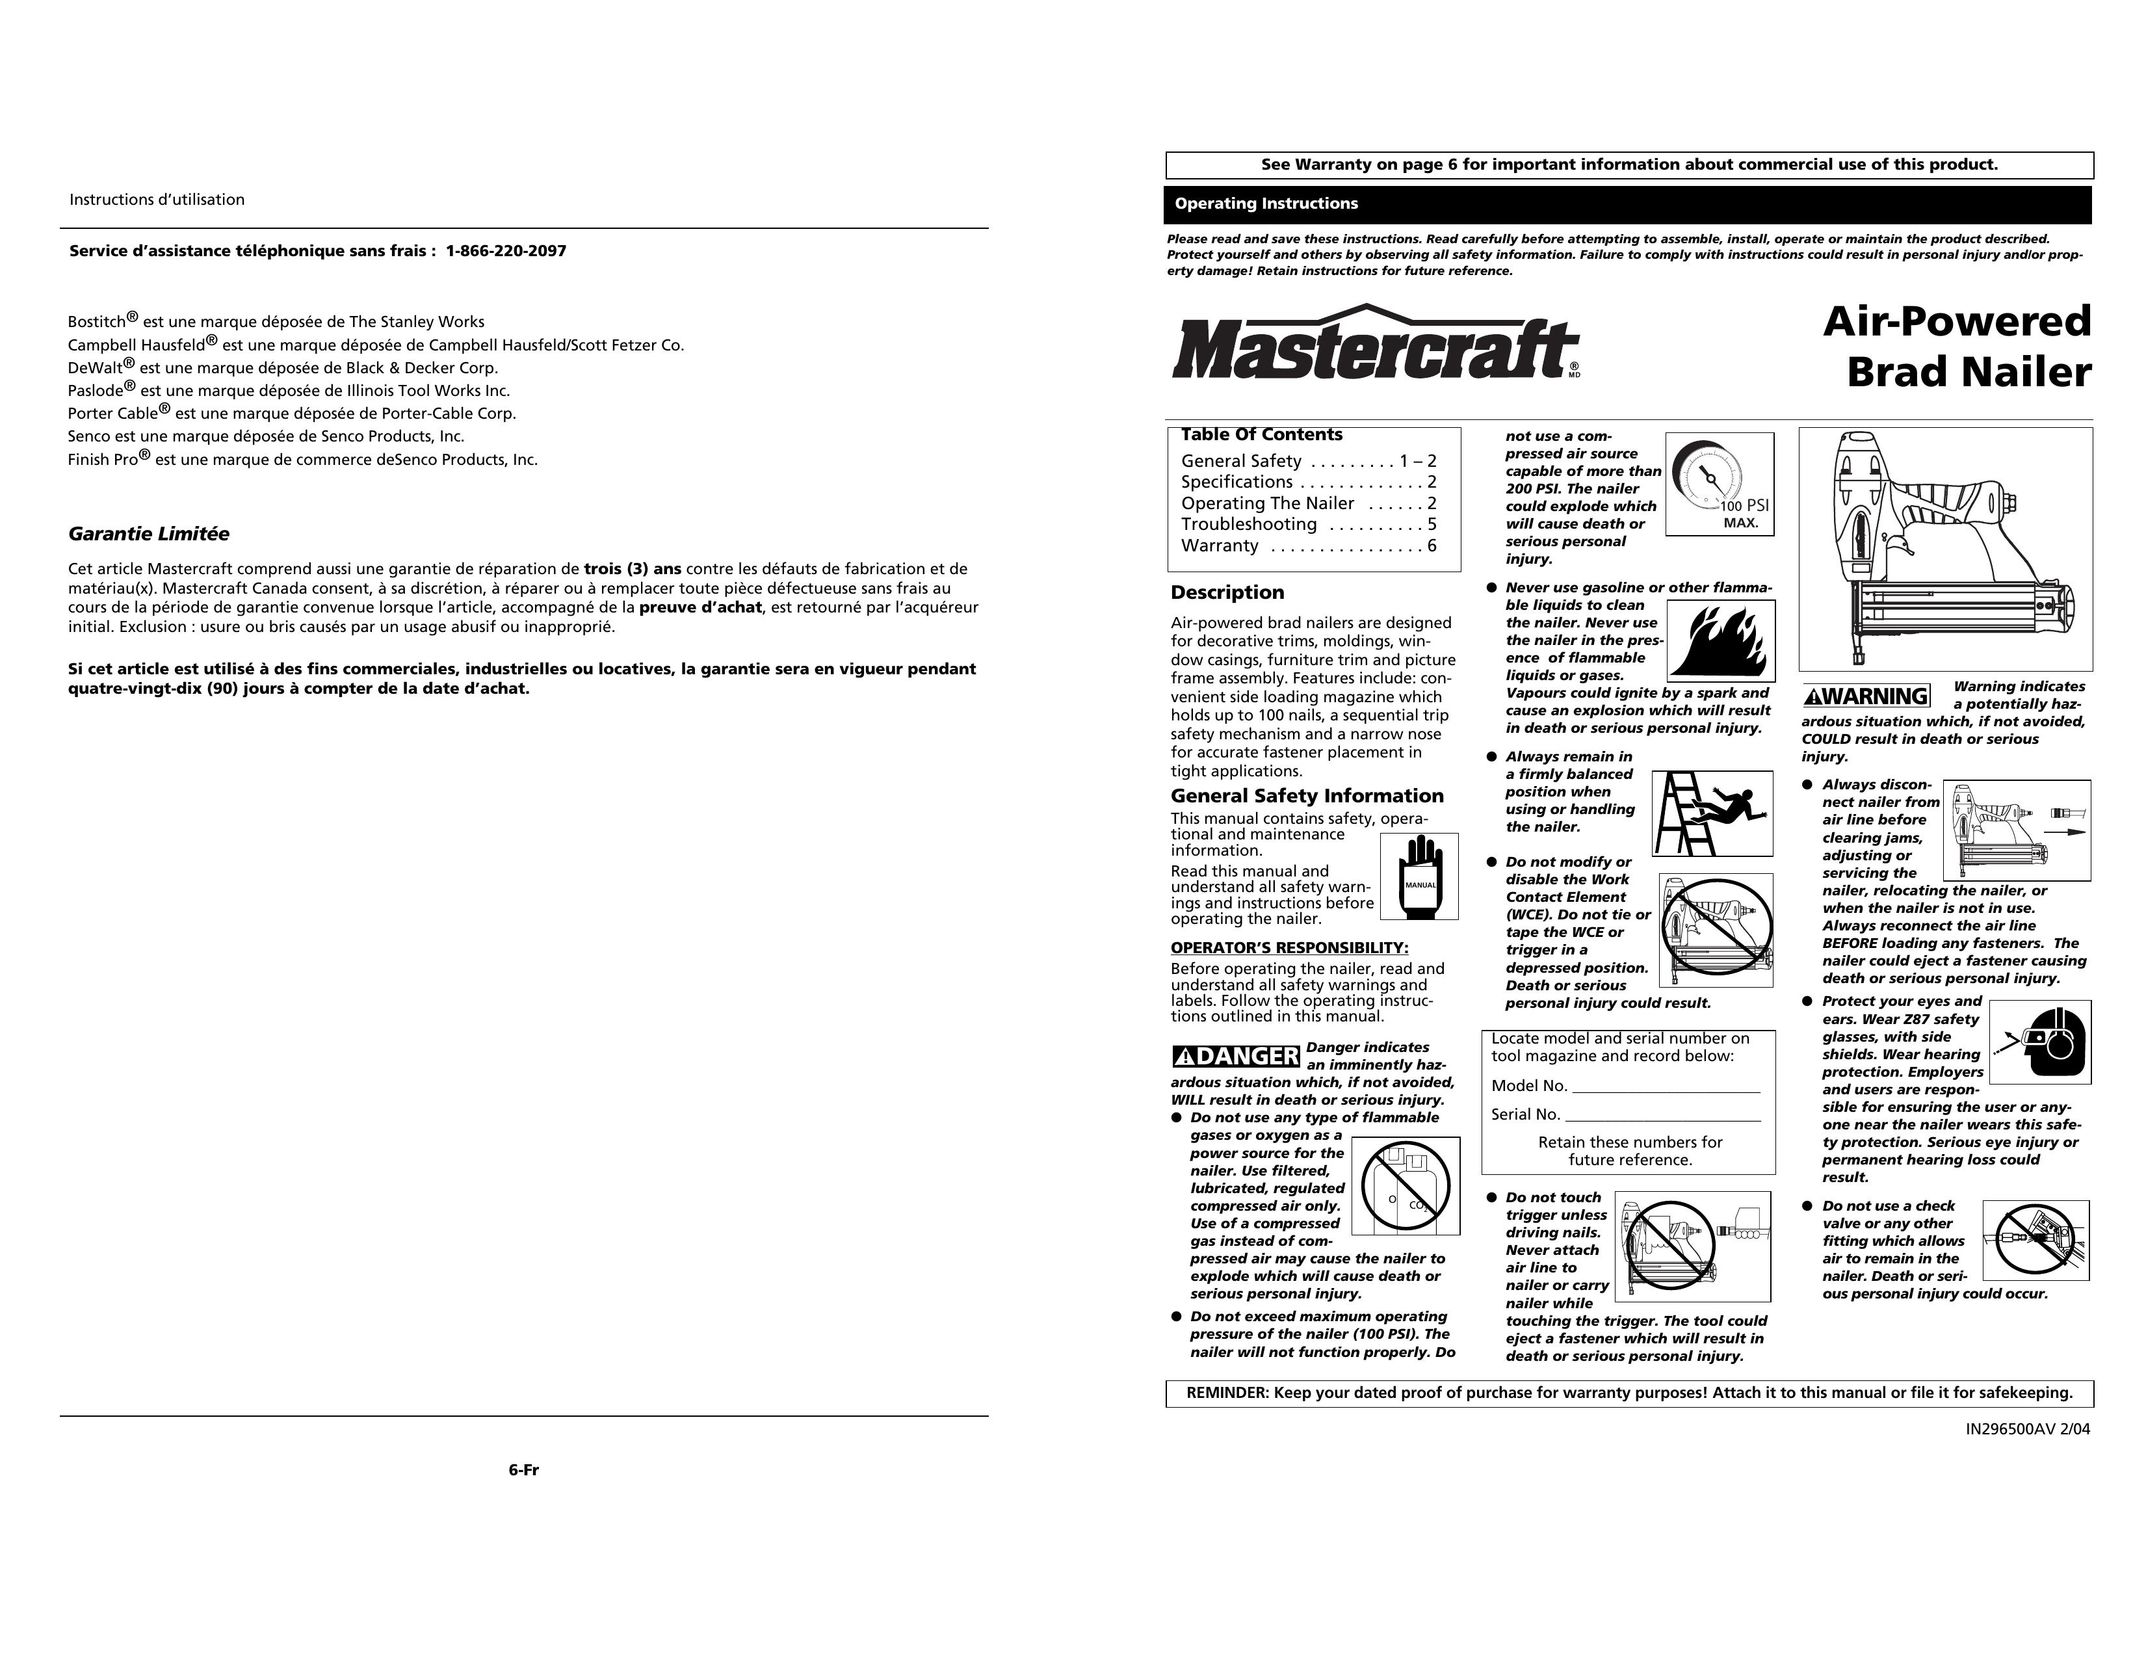 MasterCraft AIR-POWERED BRAD NAILERS Nail Gun User Manual